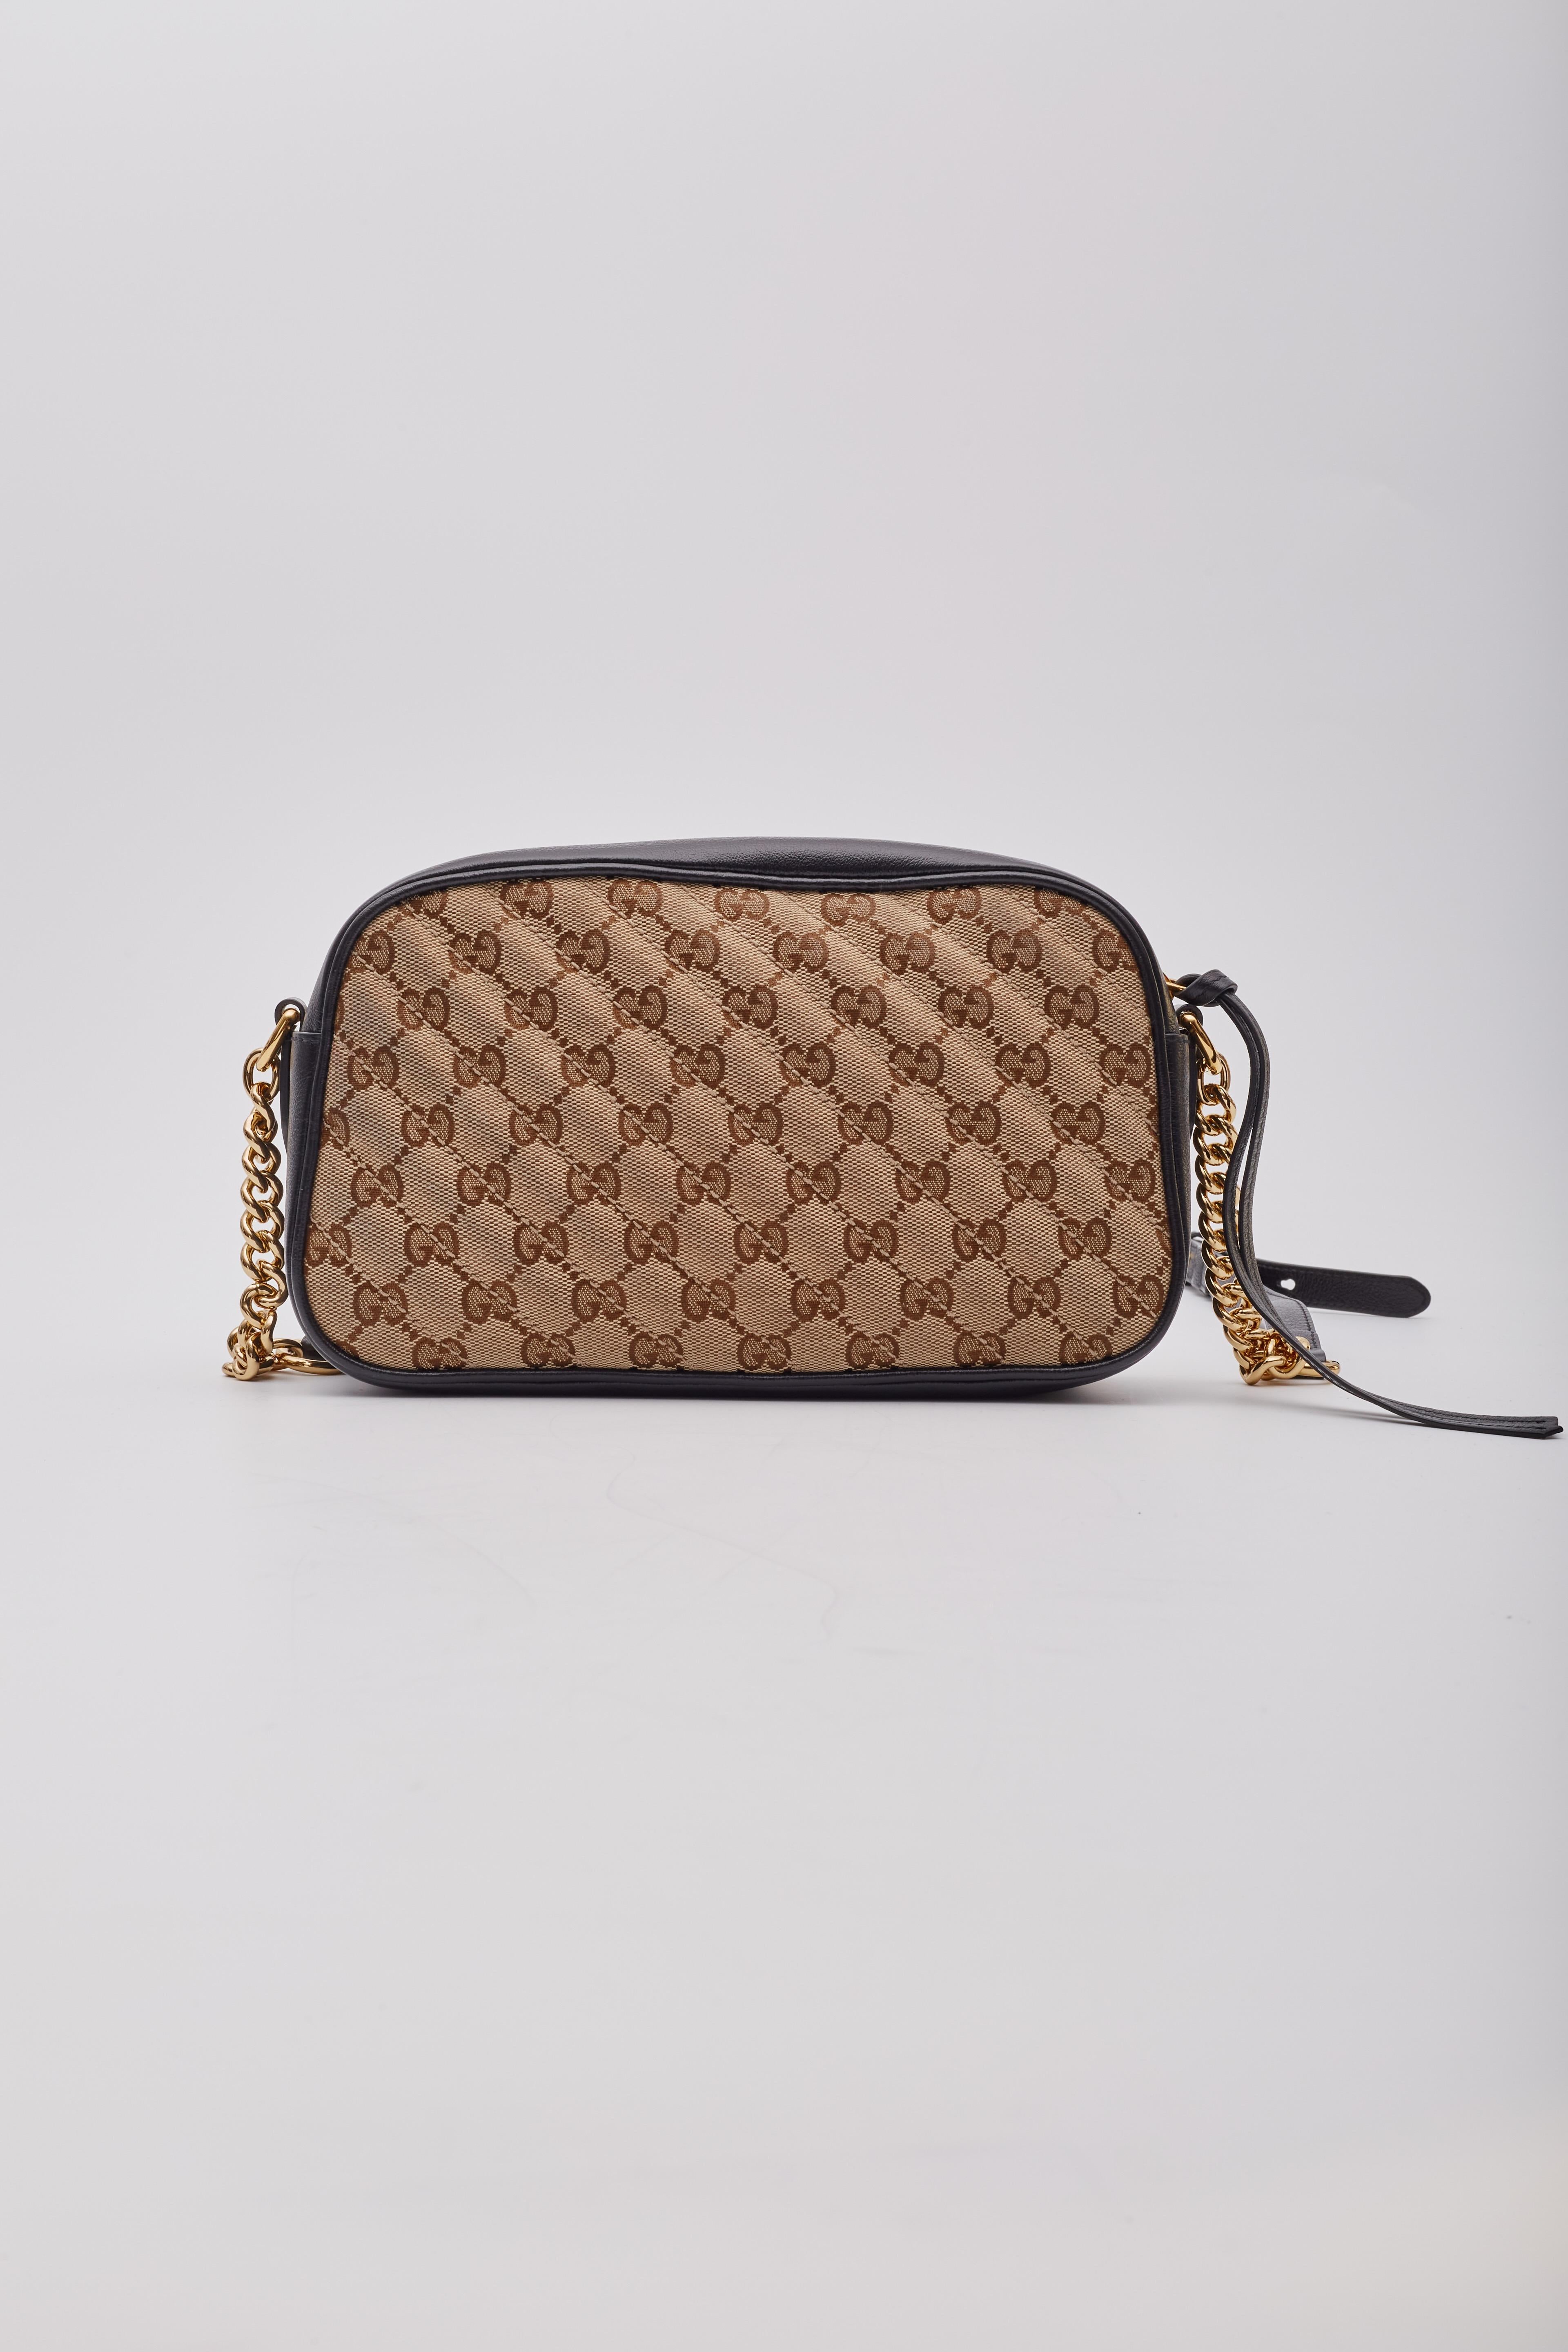 Women's Gucci Monogram Small GG Marmont Shoulder Bag Beige Black For Sale